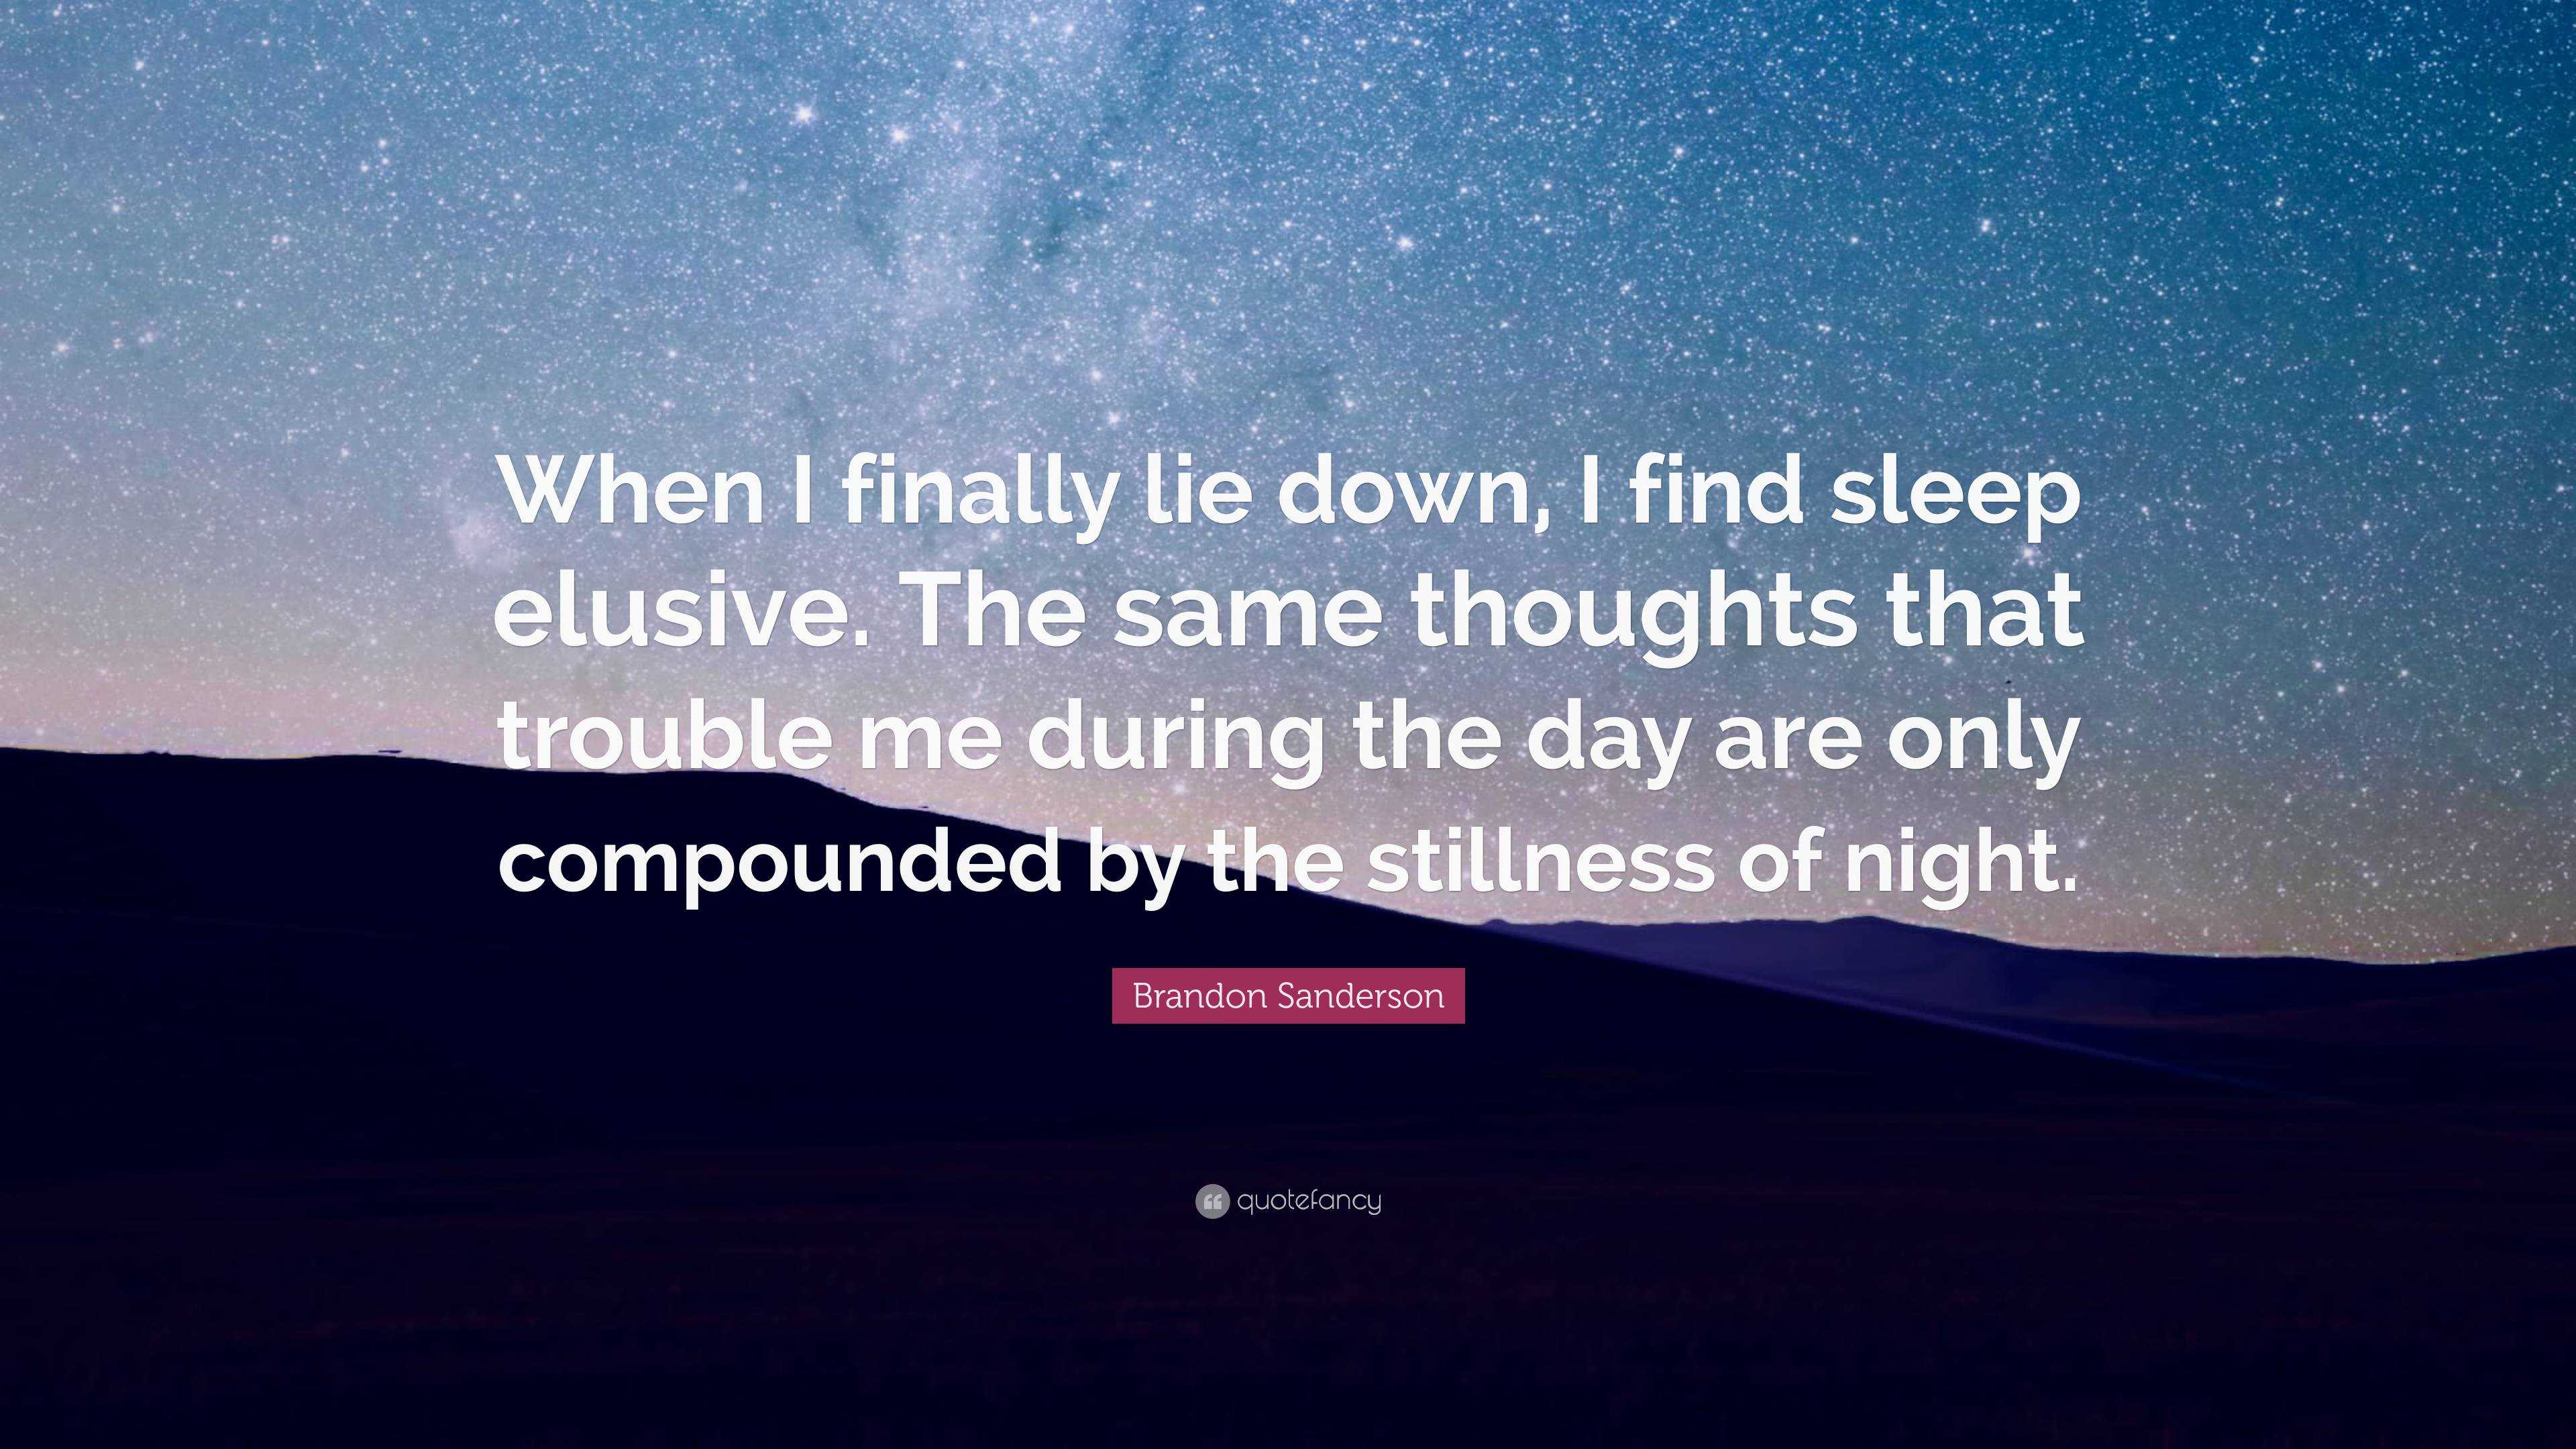 https://quotefancy.com/media/wallpaper/3840x2160/6579678-Brandon-Sanderson-Quote-When-I-finally-lie-down-I-find-sleep.jpg